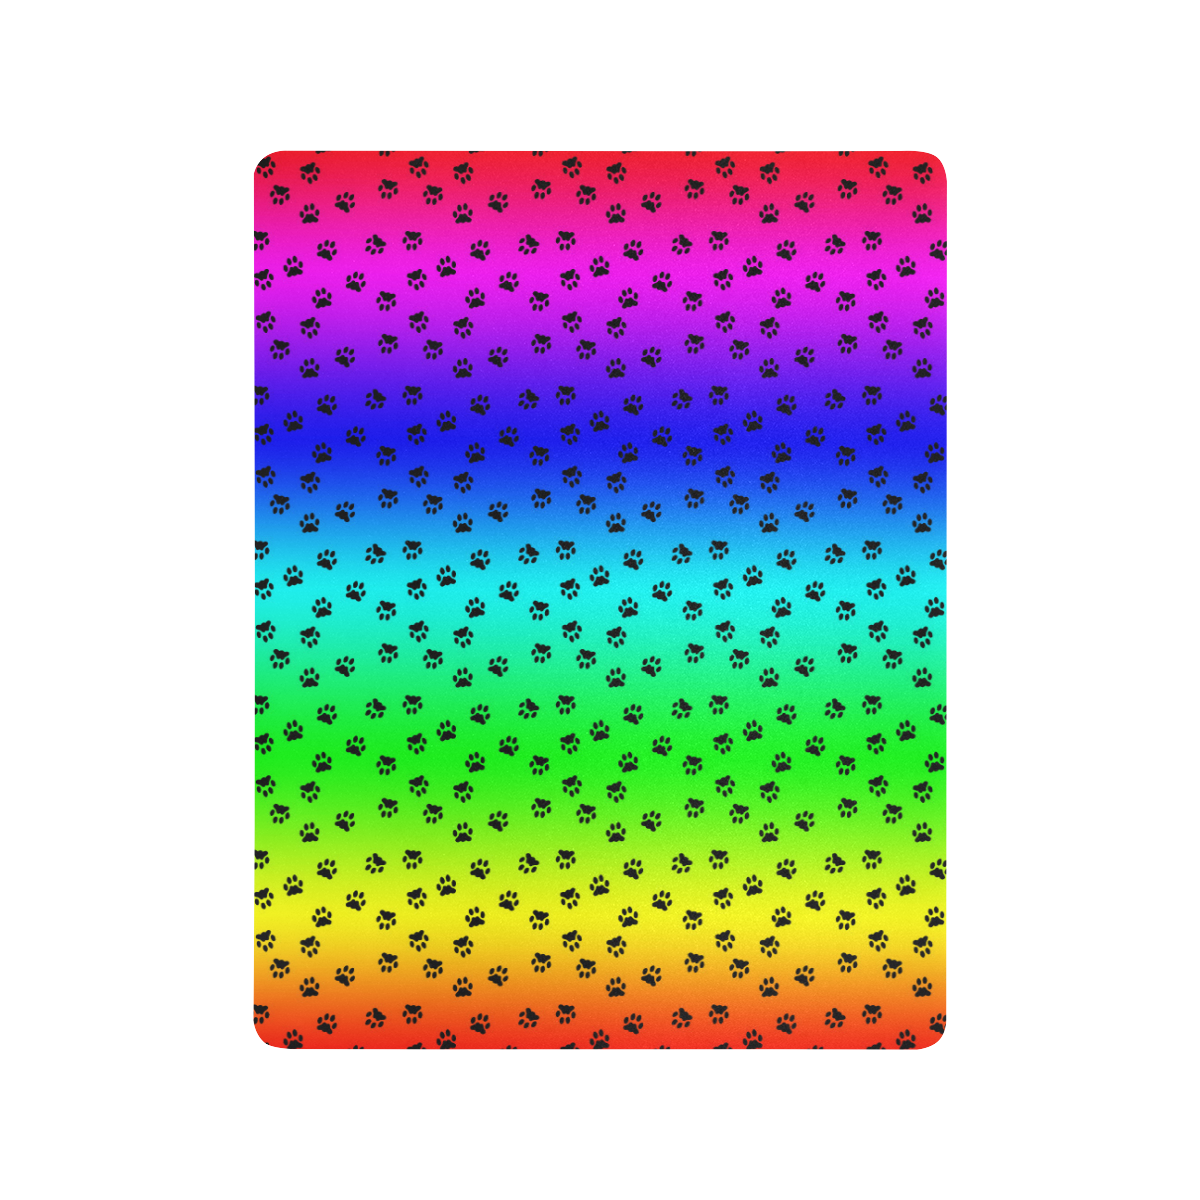 rainbow with black paws Mousepad 18"x14"